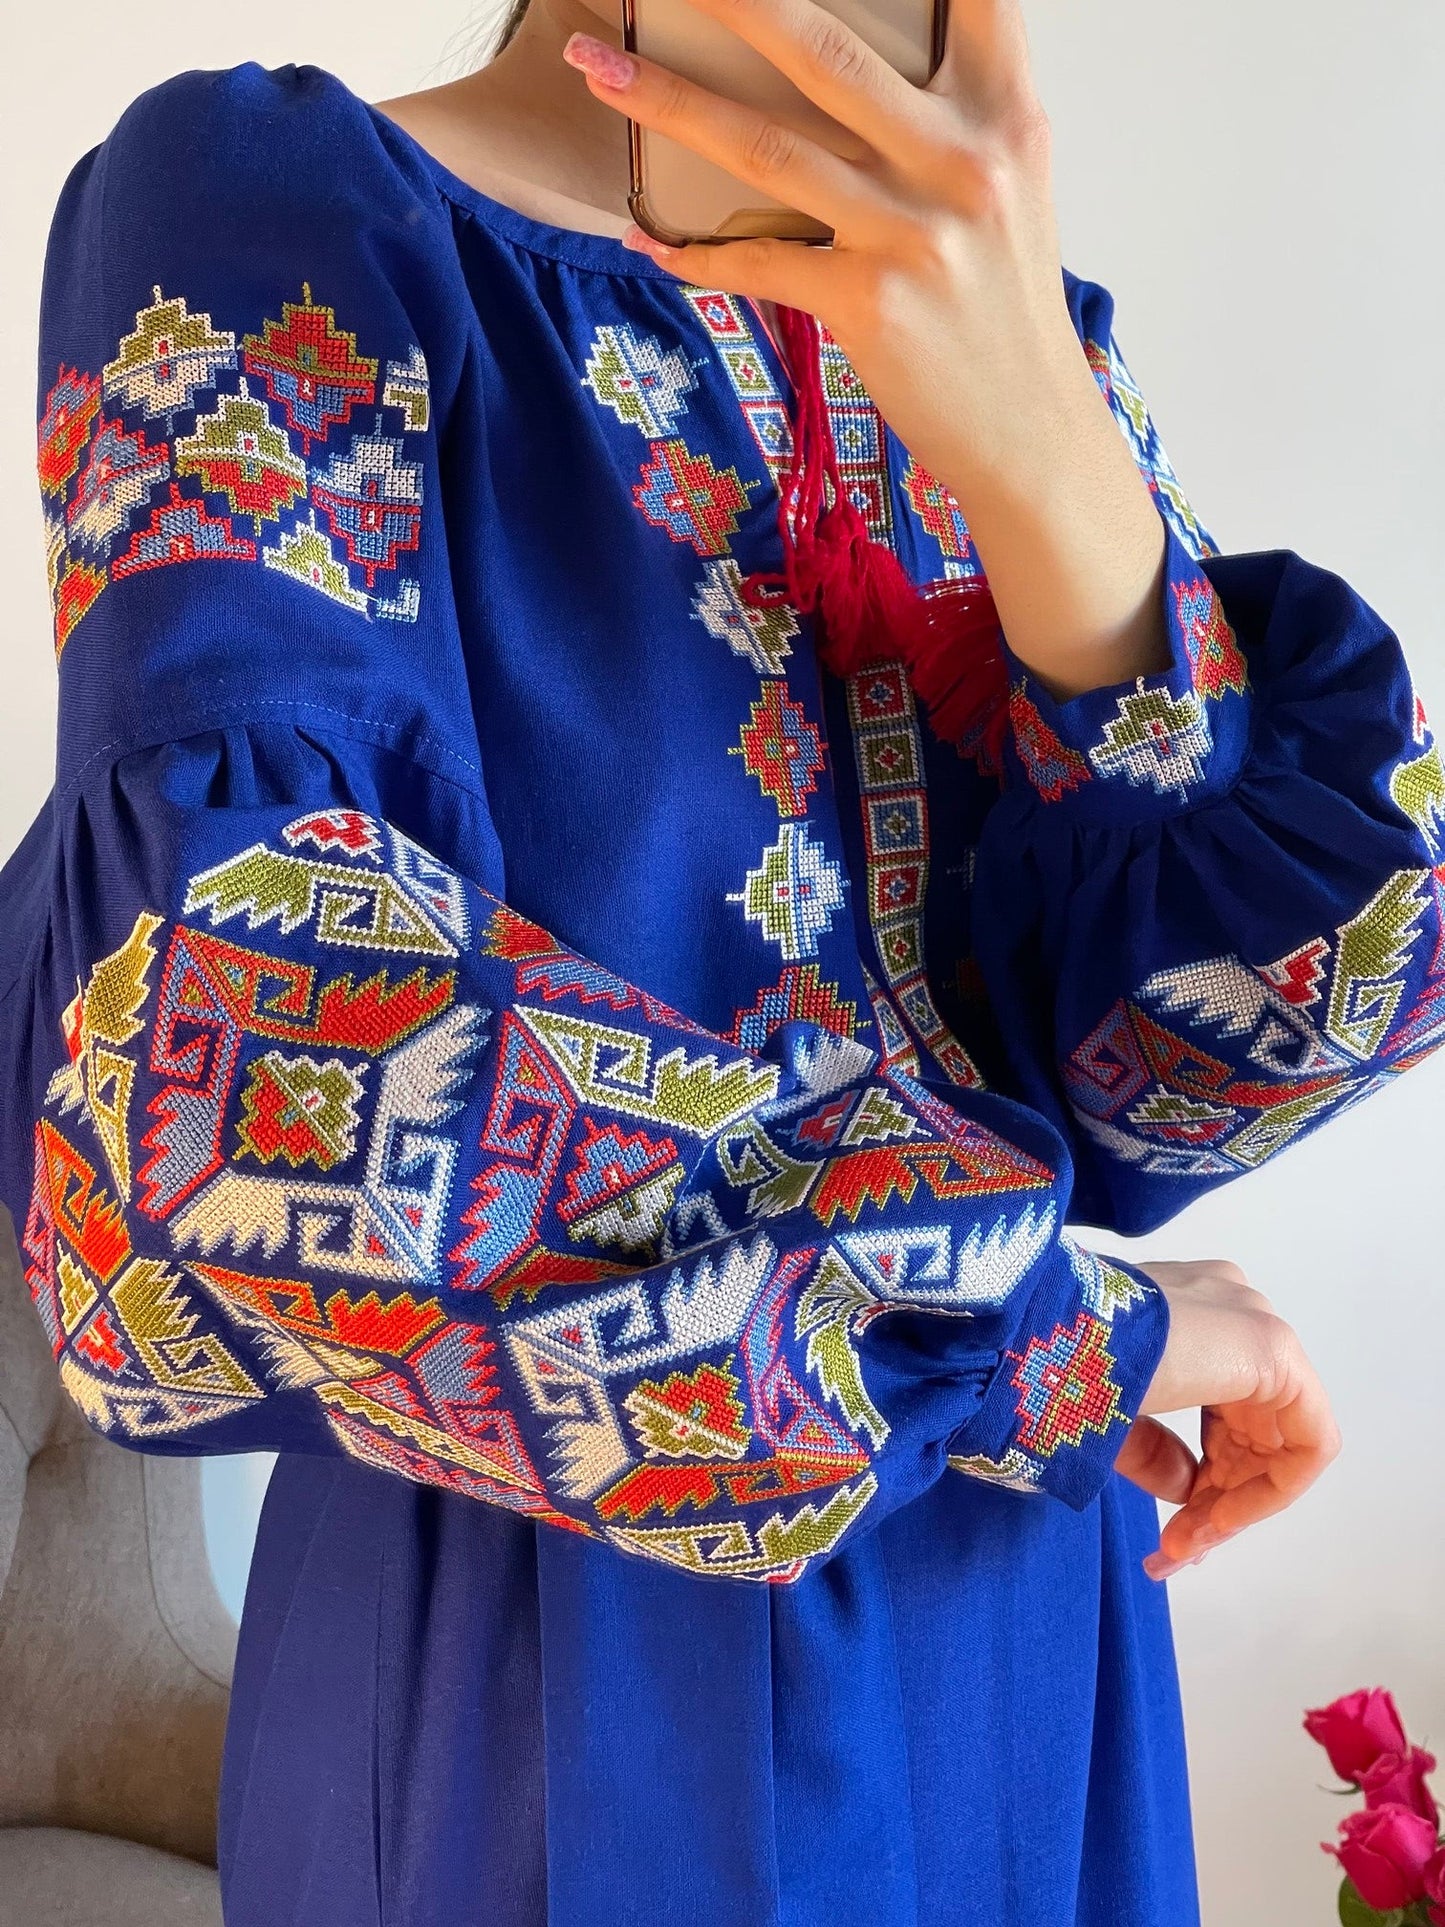 Enchanted Azure: The Mesmerizing Ultramarine Blue Ukrainian Vyshyvanka Dress - Vatra